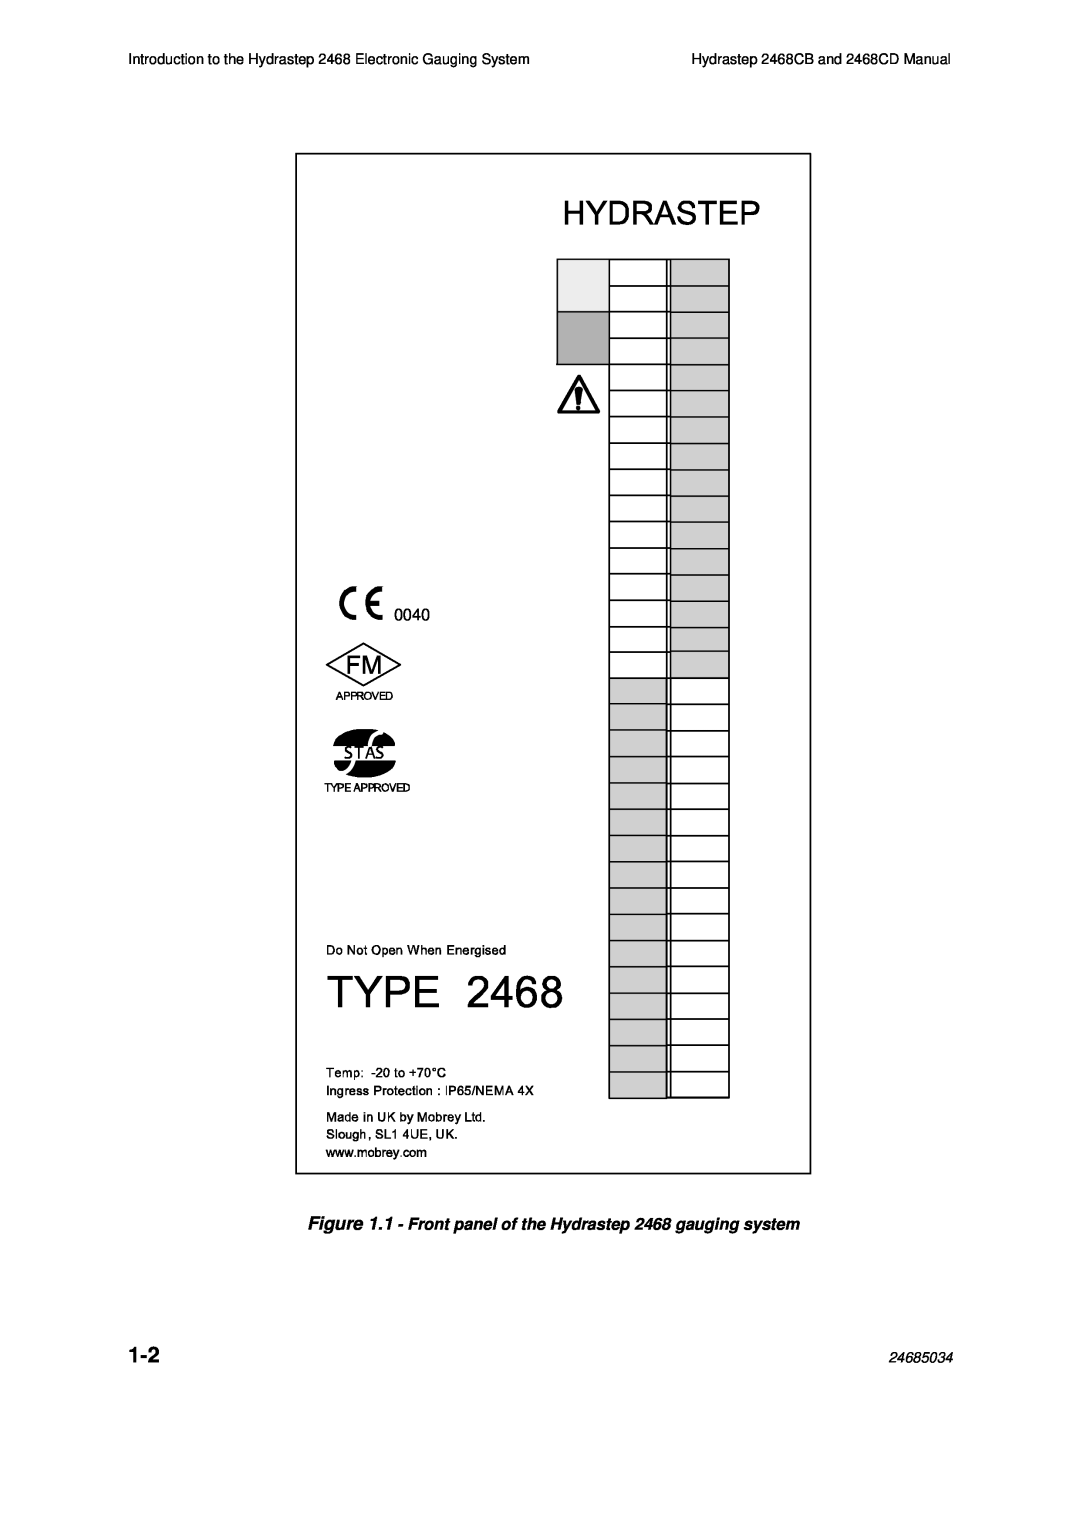 Emerson manual Hydrastep 2468CB and 2468CD Manual, 0040, 24685034 